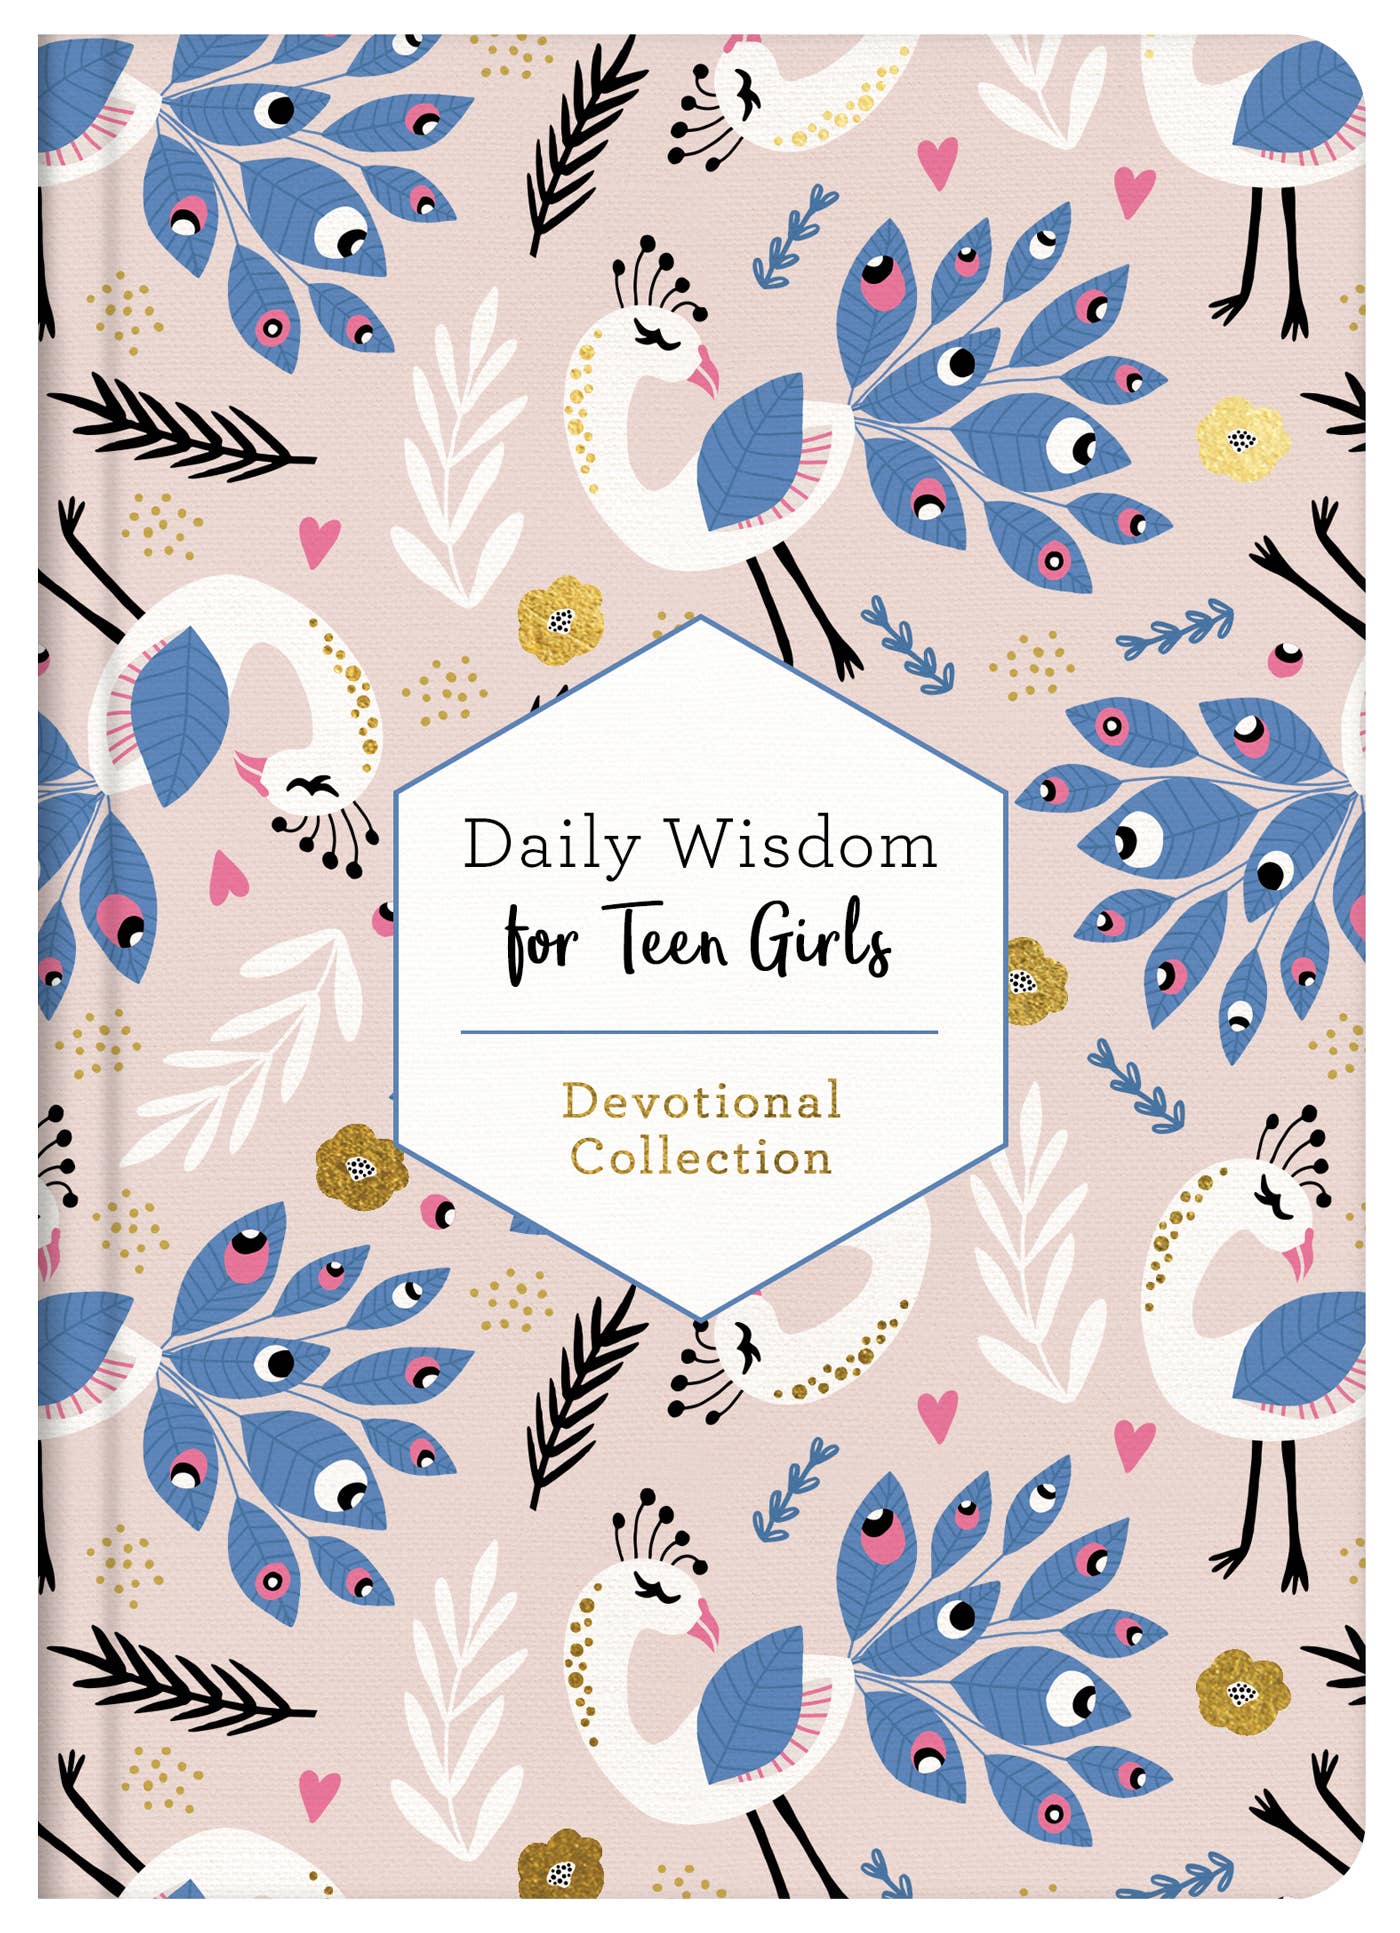 Daily Wisdom for Teen Girls